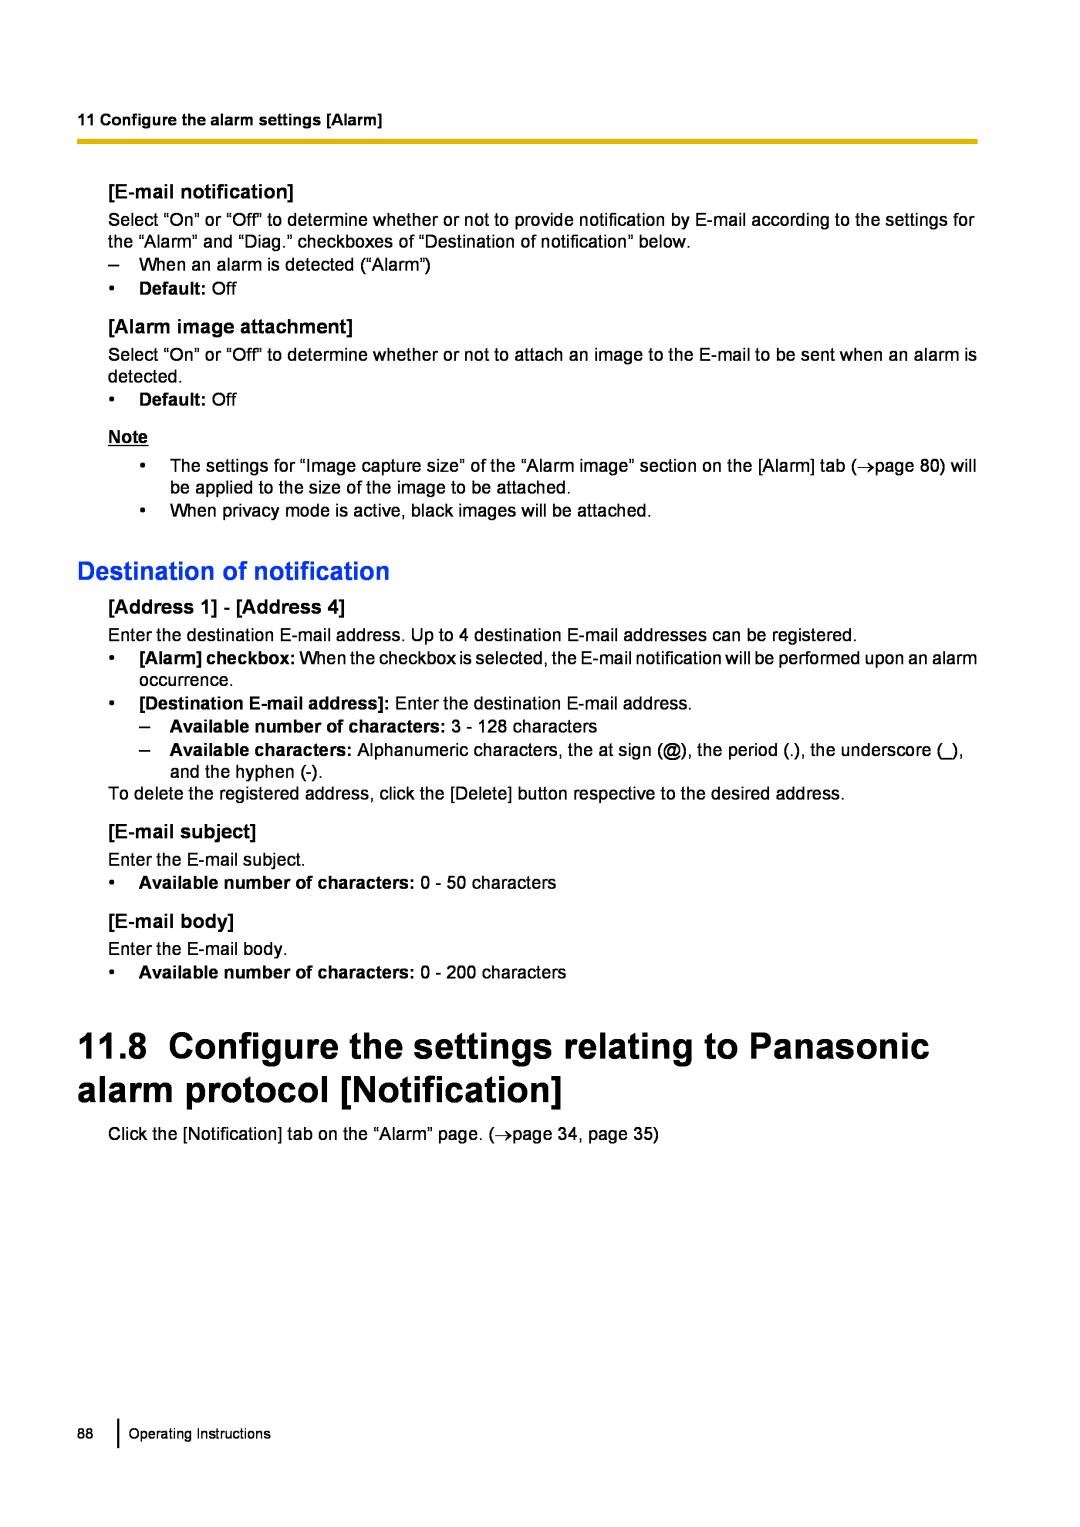 Panasonic BL-VT164W manual Destination of notification, E-mailnotification, Alarm image attachment, Address 1 - Address 